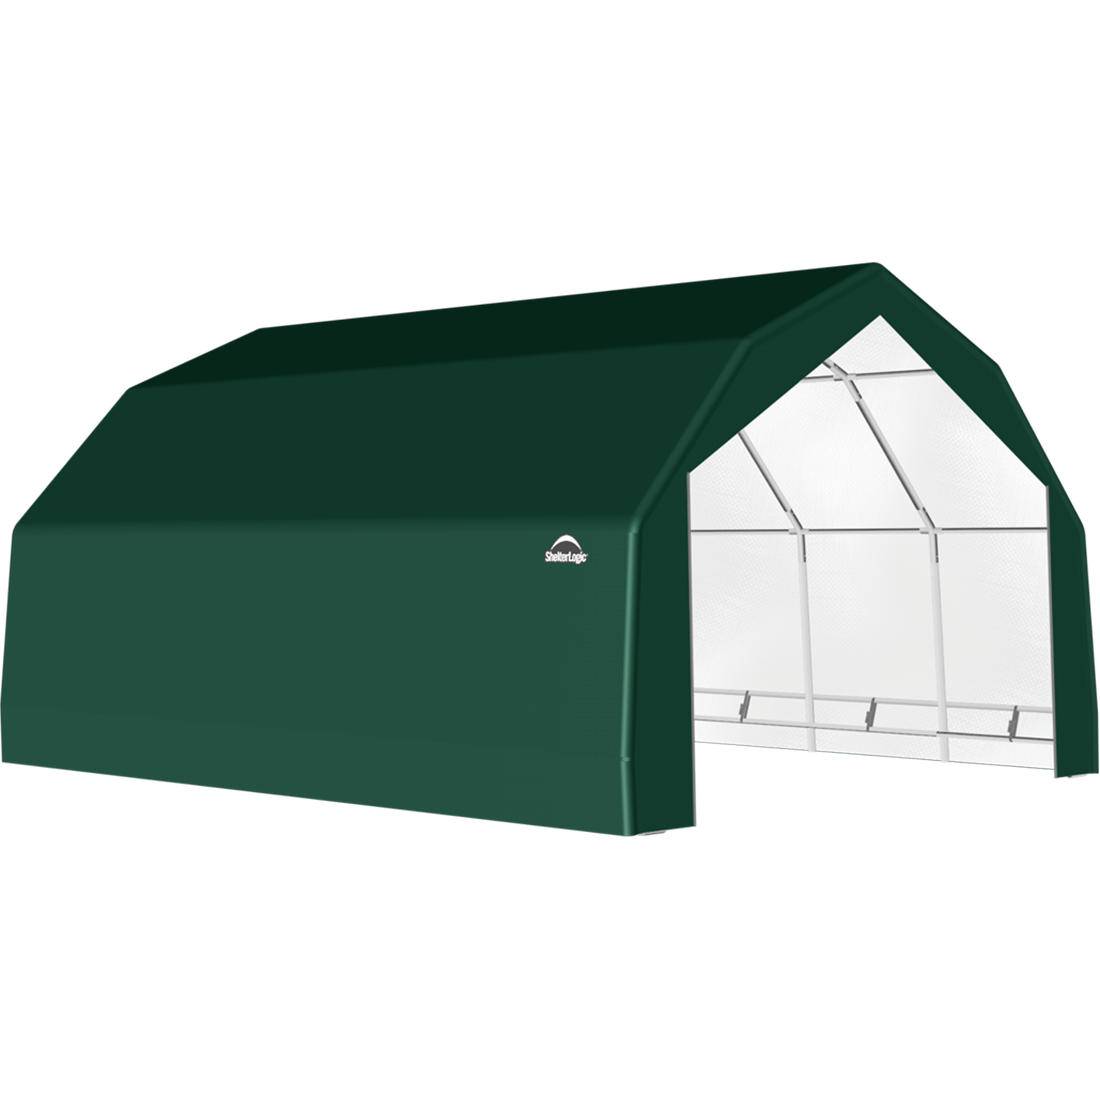 ShelterTech SP Series Barn Shelter, 20 ft. x 24 ft. x 12 ft. Heavy Duty PVC 14.5 oz. Green